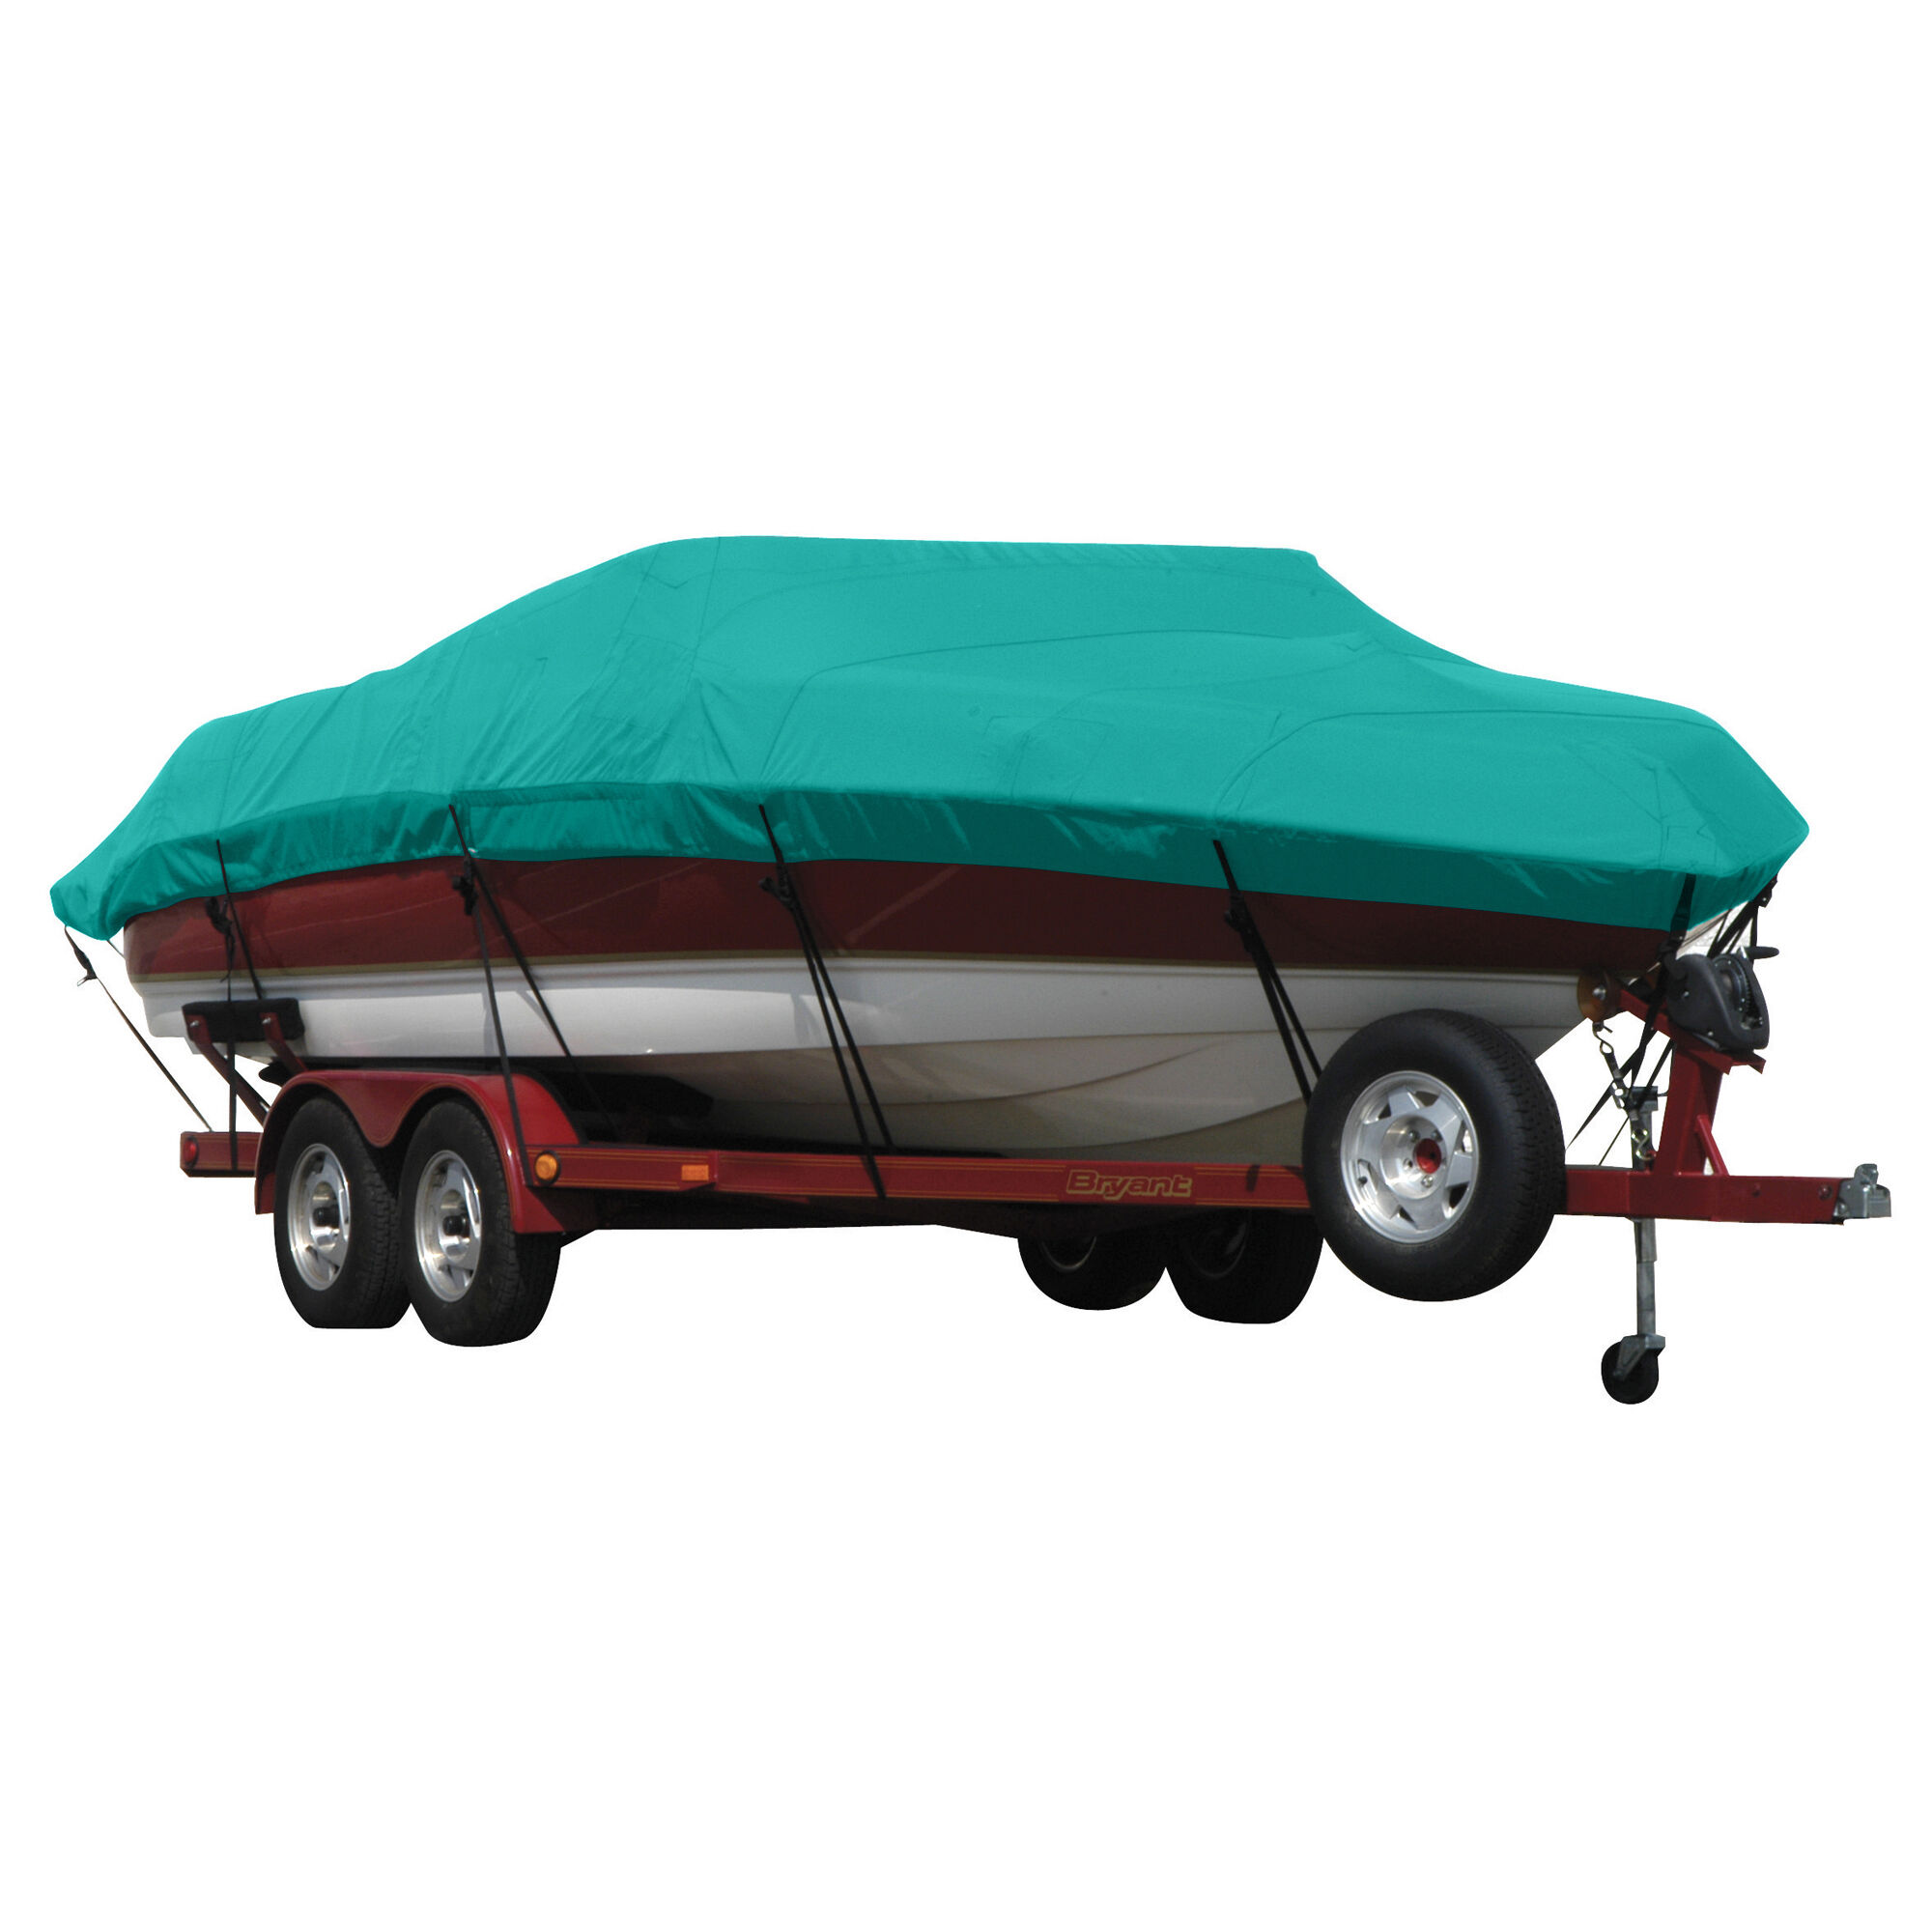 Covermate Exact Fit Sunbrella Boat Cover for Tracker Tundra 21 Dc Tundra 21 Dual Console w/ Port Motorguide Trolling Motor O/B. Persian Green